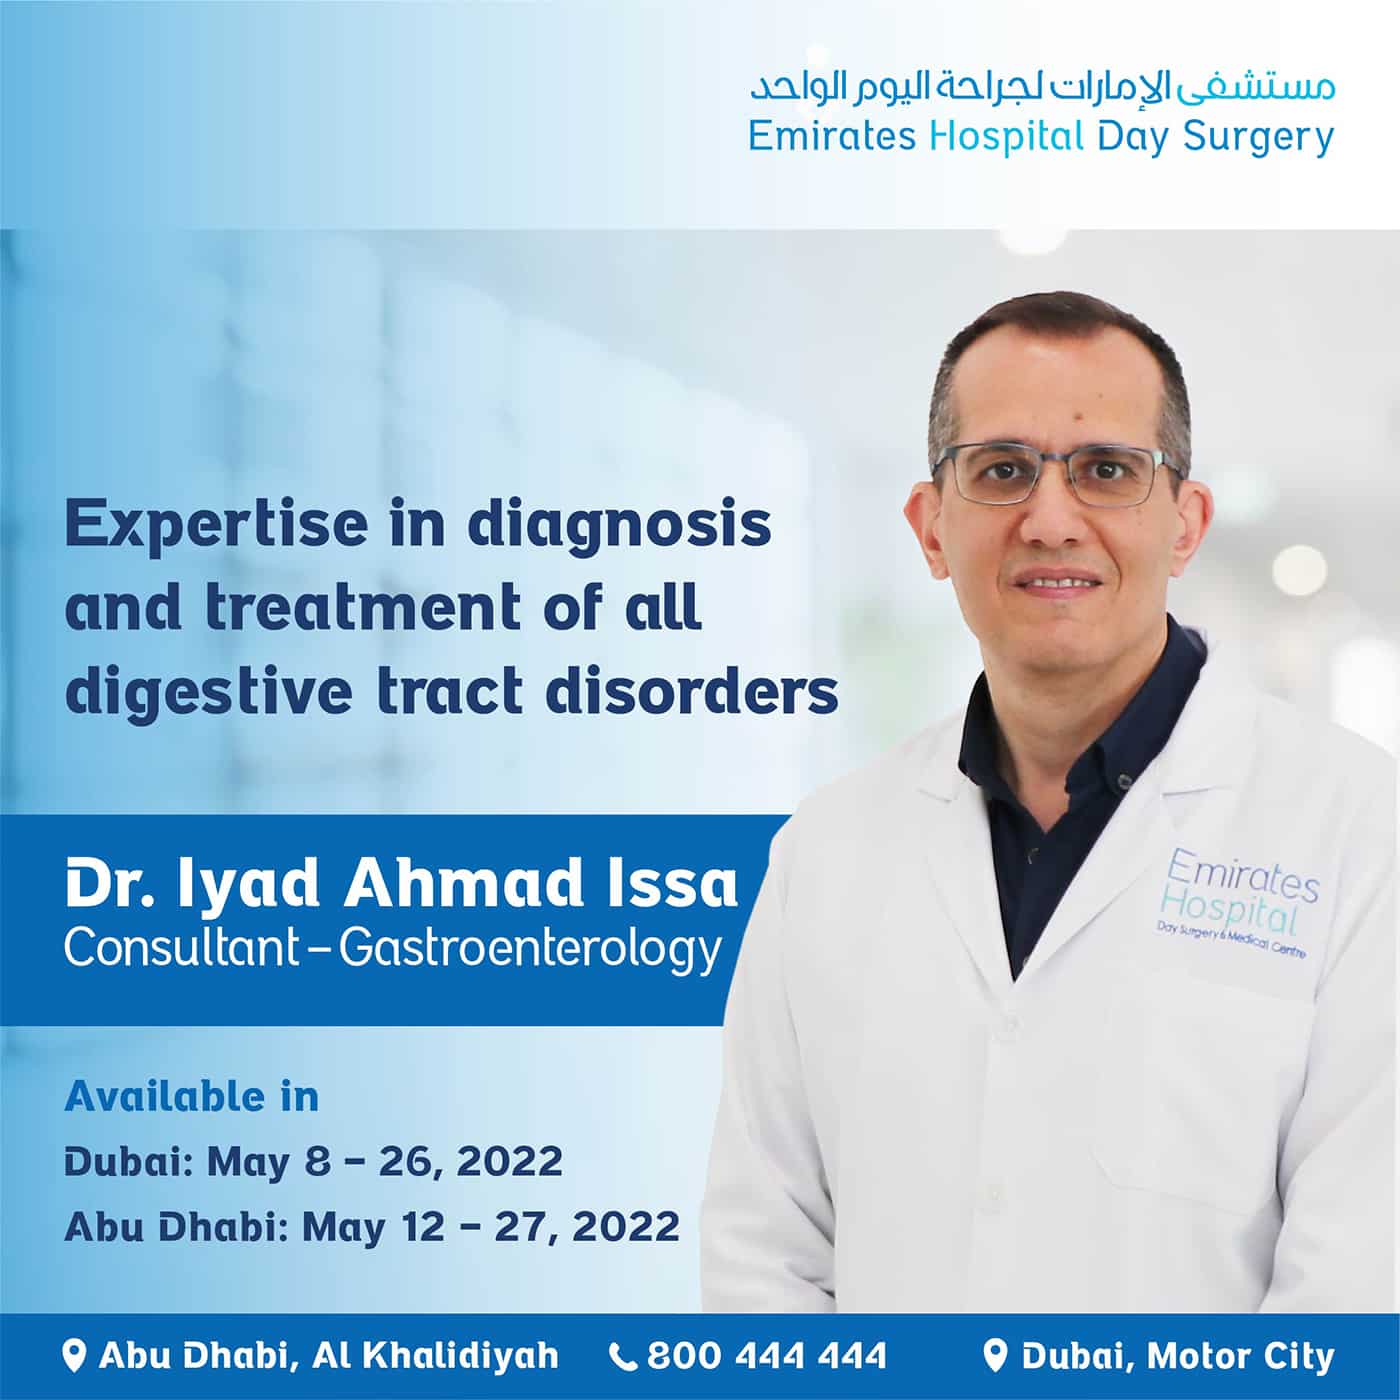 Dr. Iyad Ahmad Issa, Consultant Gastroenterologist is visiting Abu Dhabi - Dubai